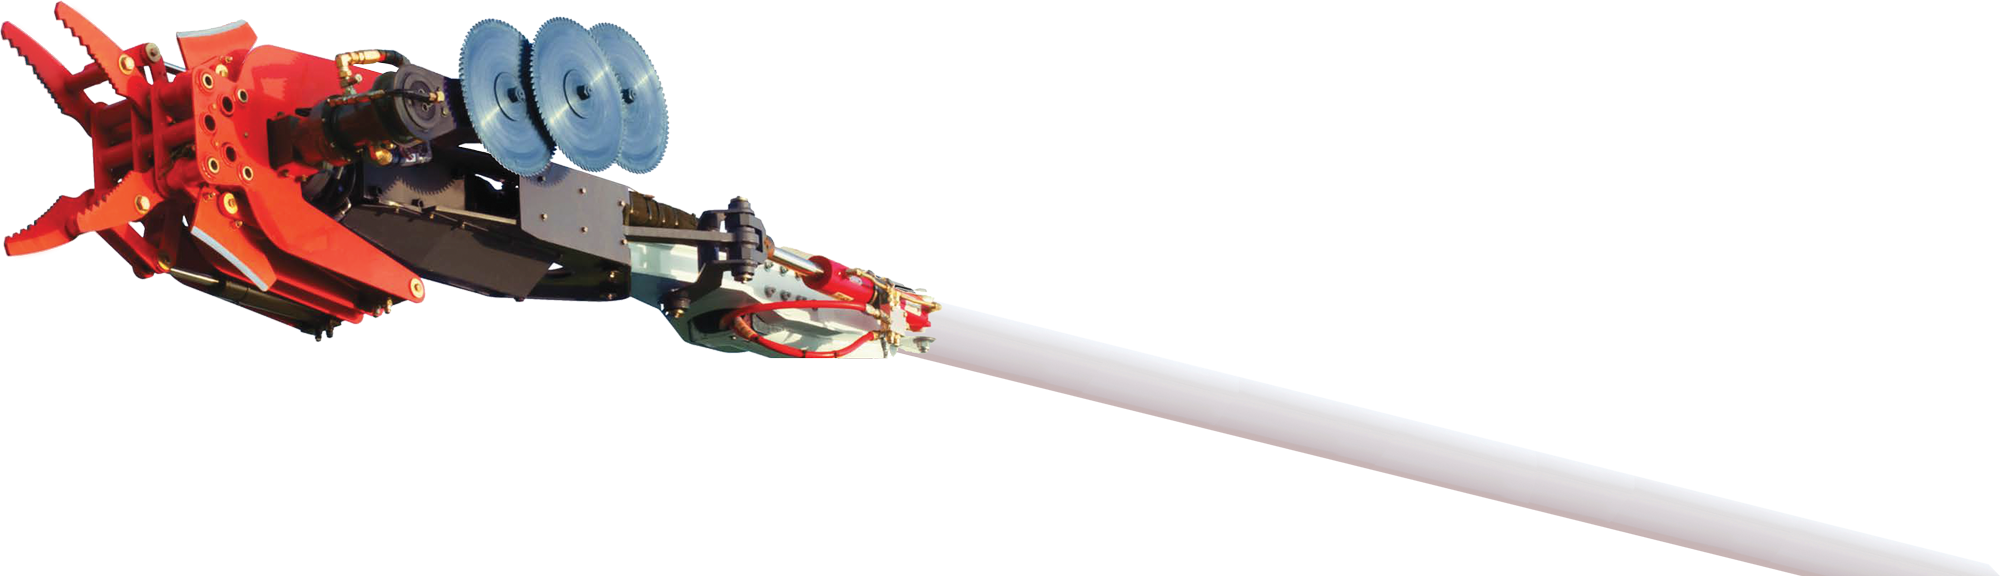 TerraTech saw blade